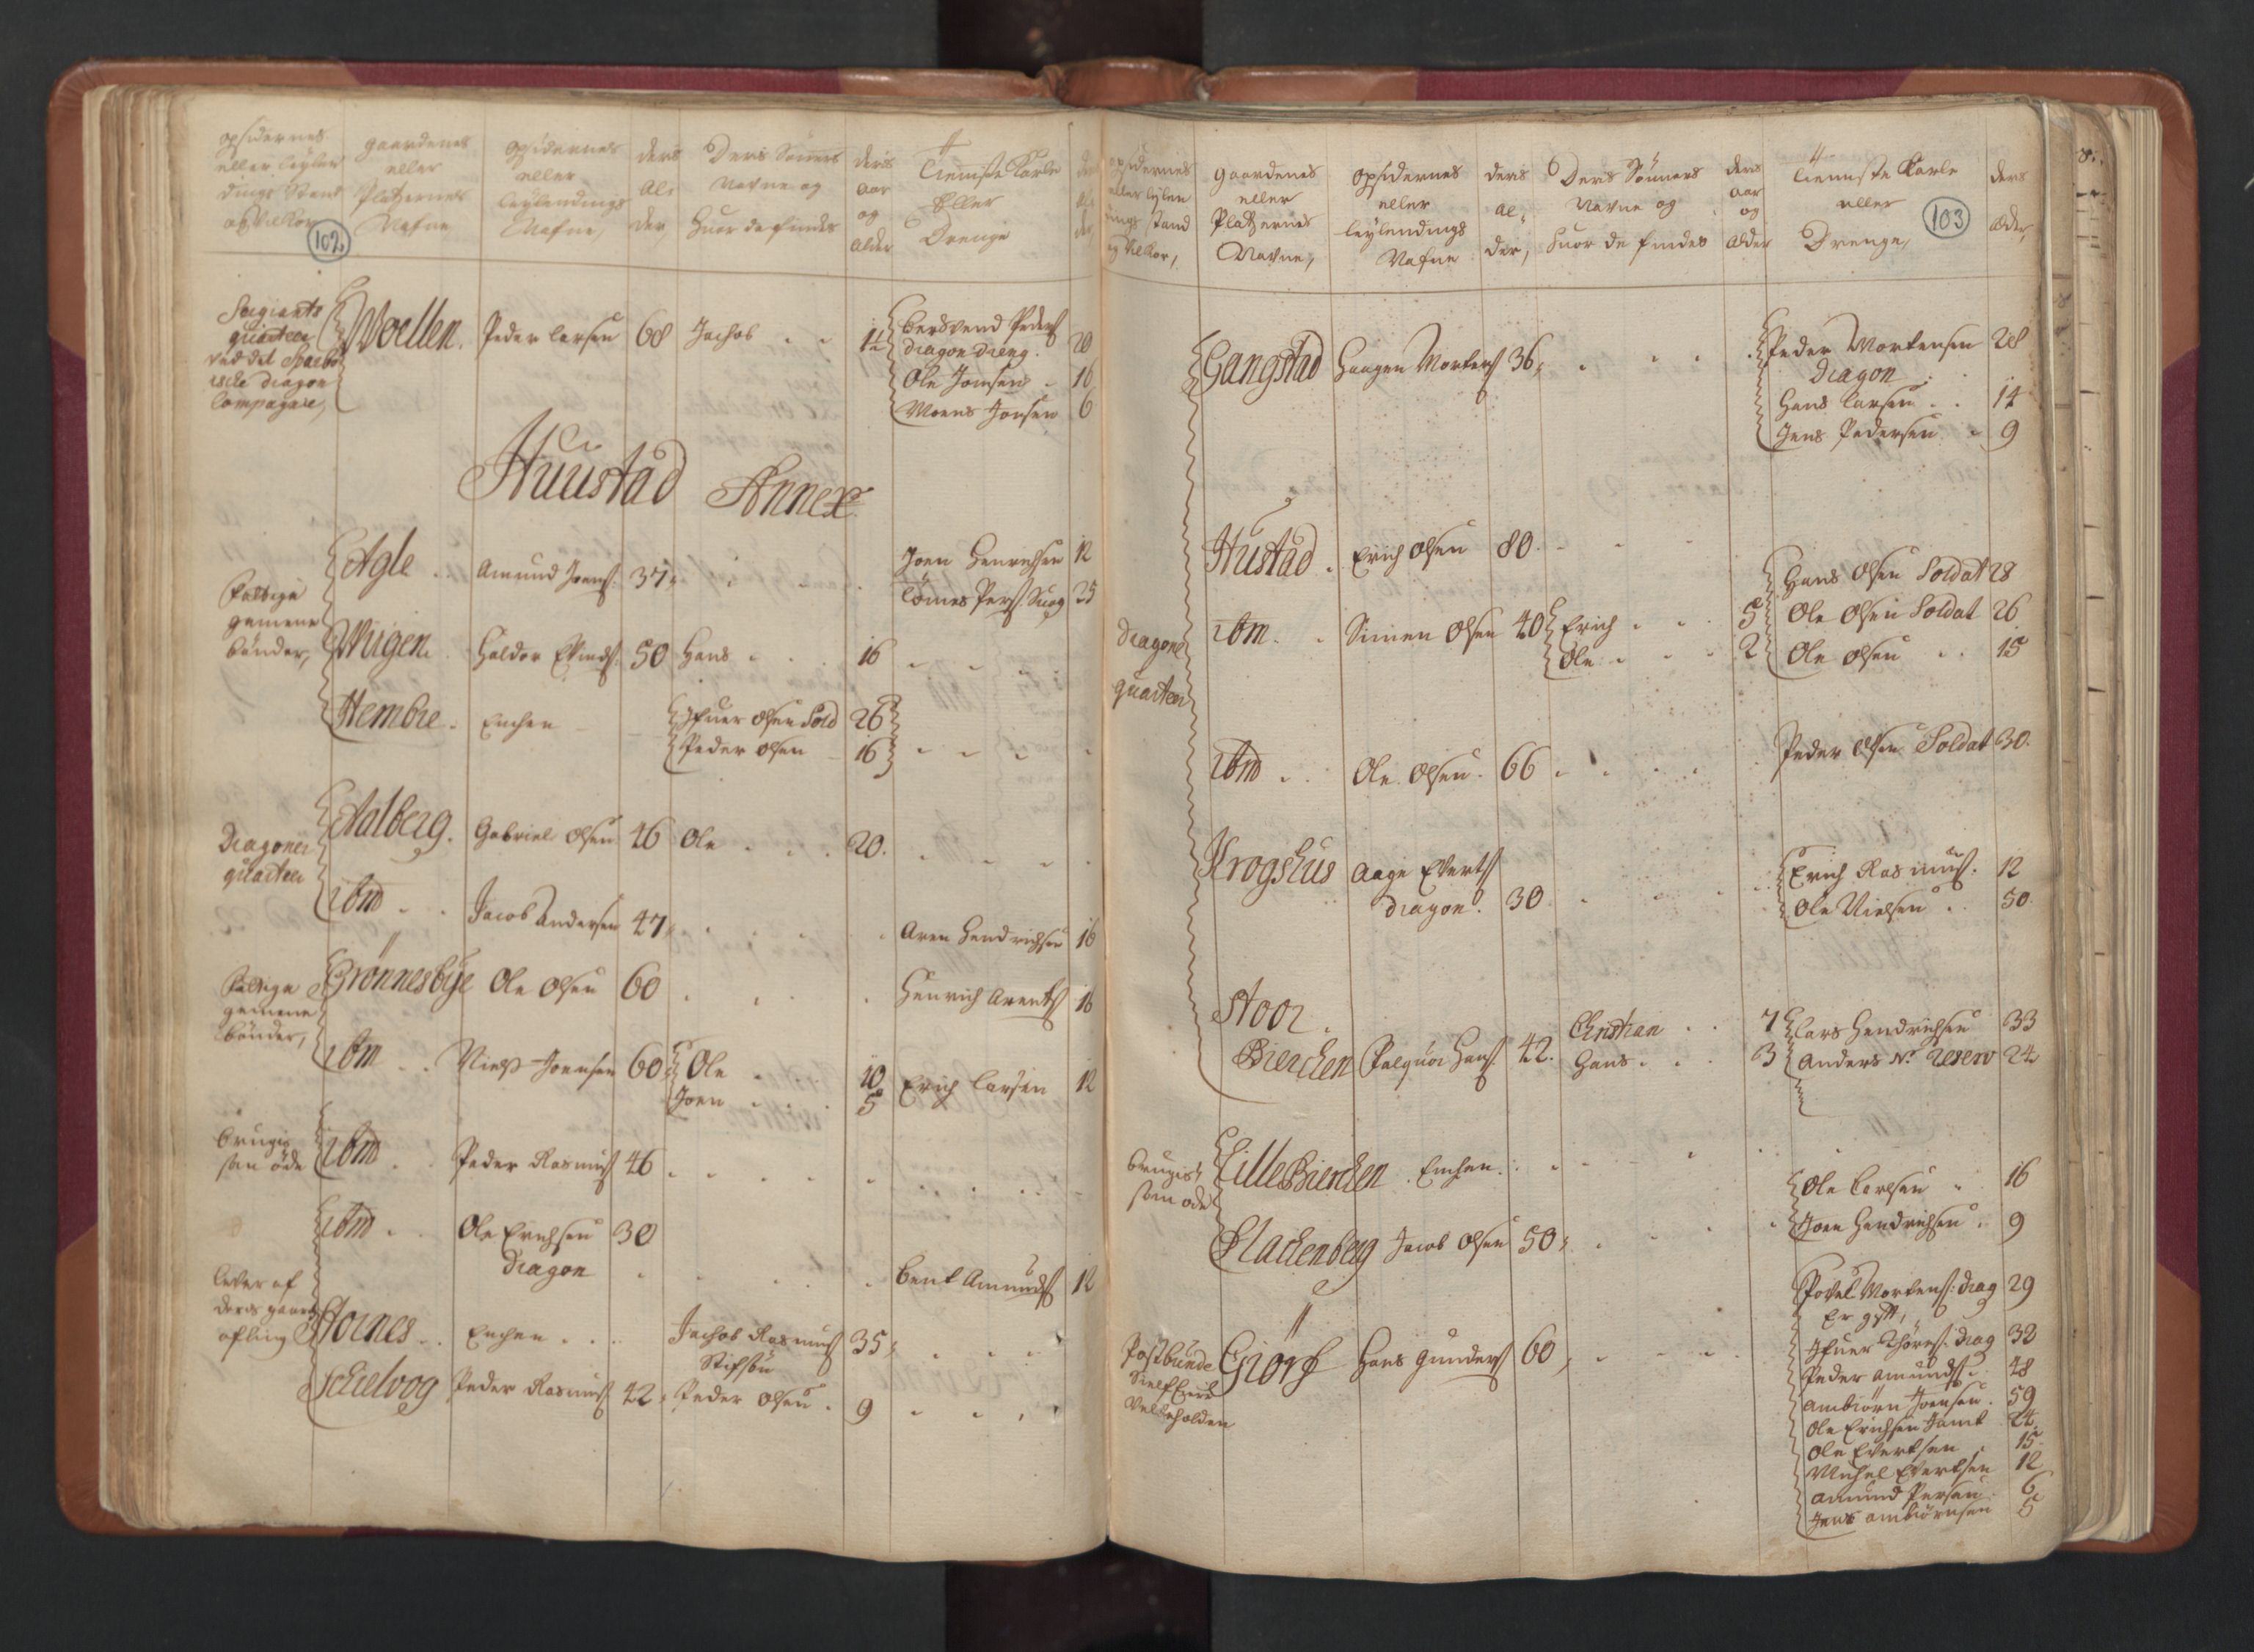 RA, Census (manntall) 1701, no. 15: Inderøy fogderi and Namdal fogderi, 1701, p. 102-103